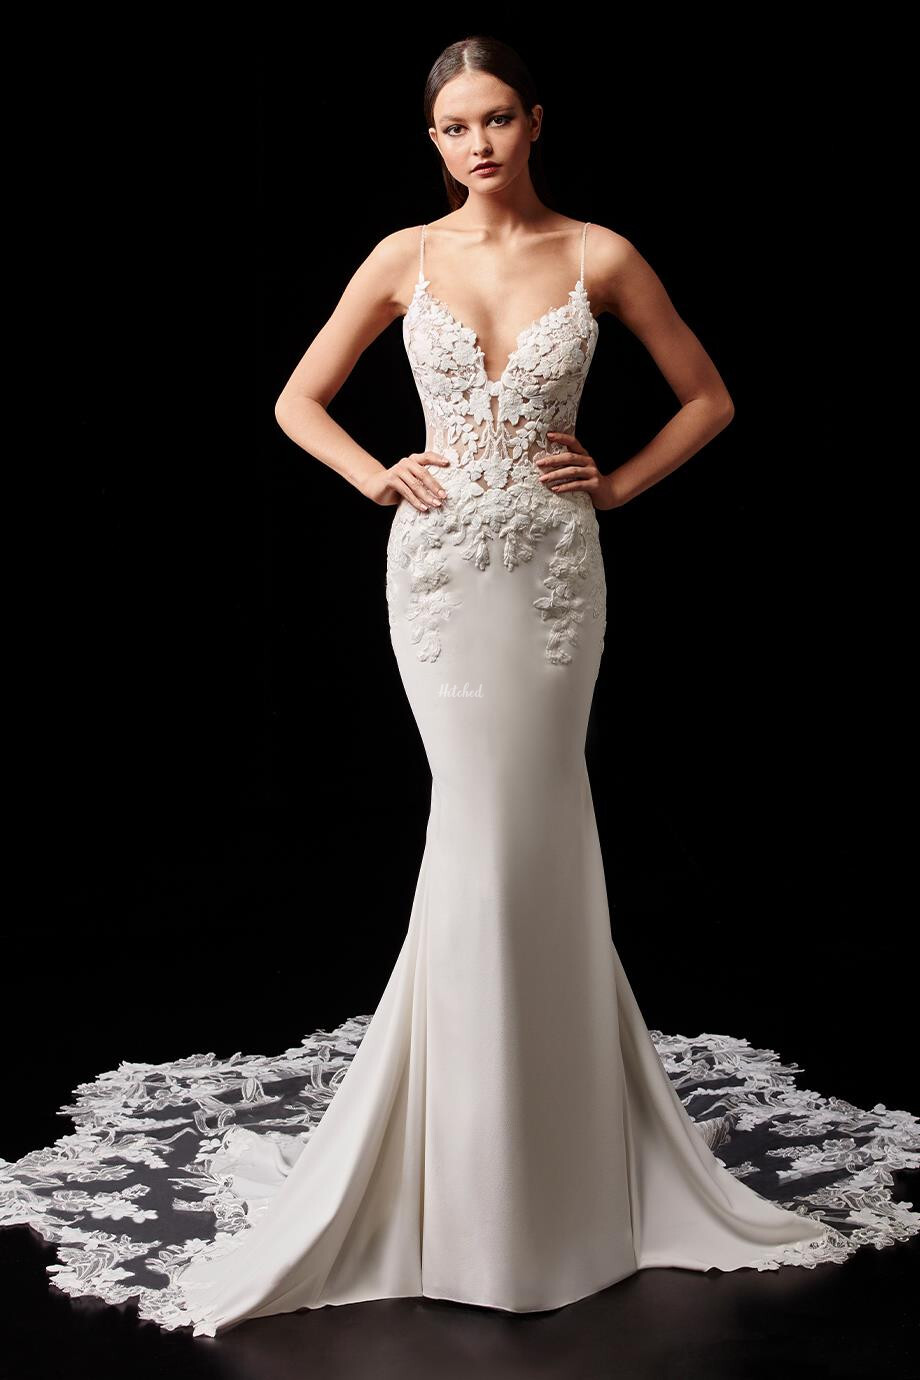 Pearl Wedding Dress From Enzoani Uk 3046